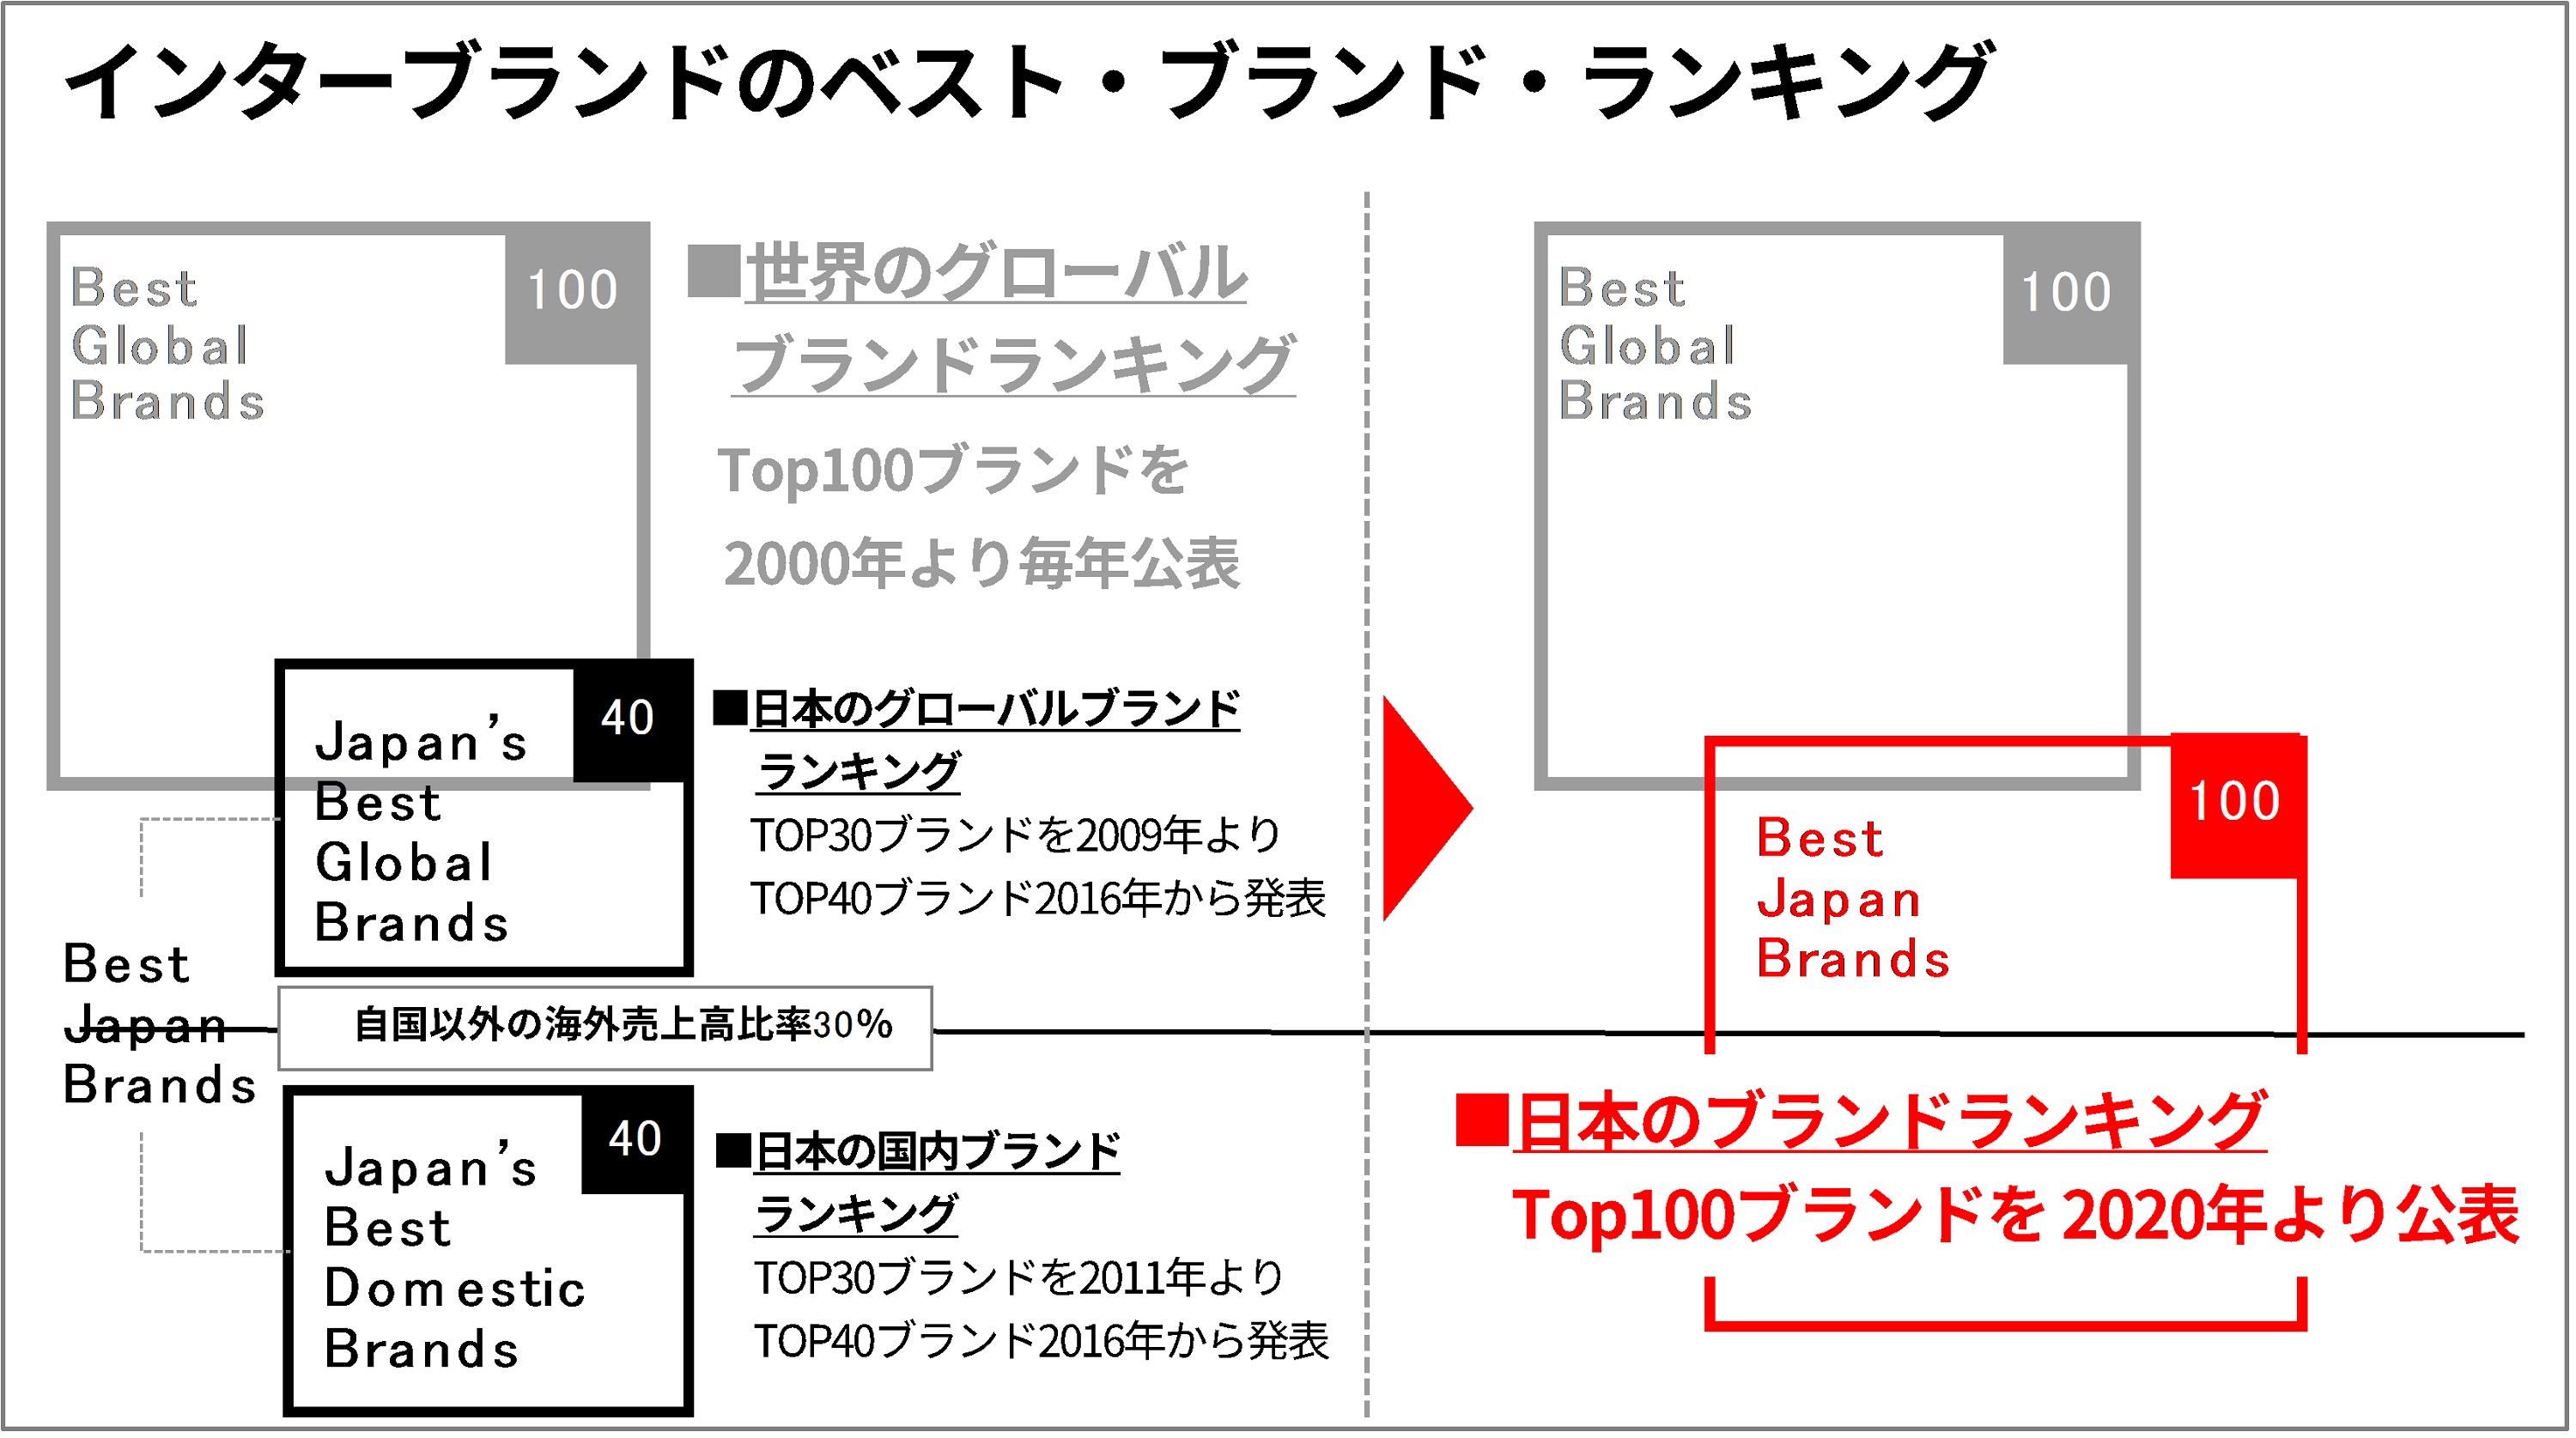 Interbrand Best Japan Brands 株式会社インターブランドジャパンのプレスリリース